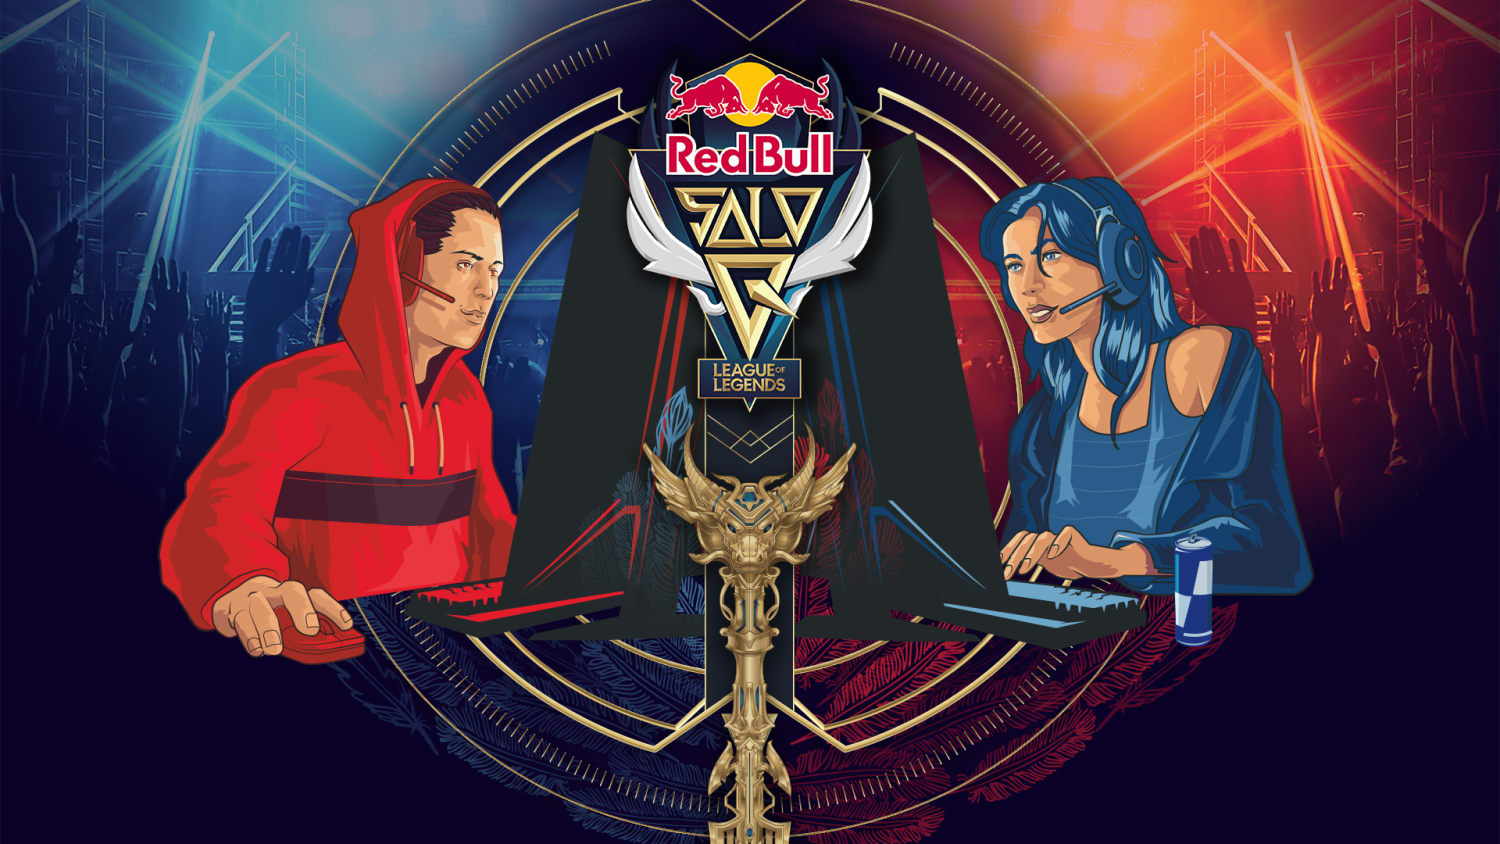 Red Bull Solo Q 1v1 League of Legends tournament info